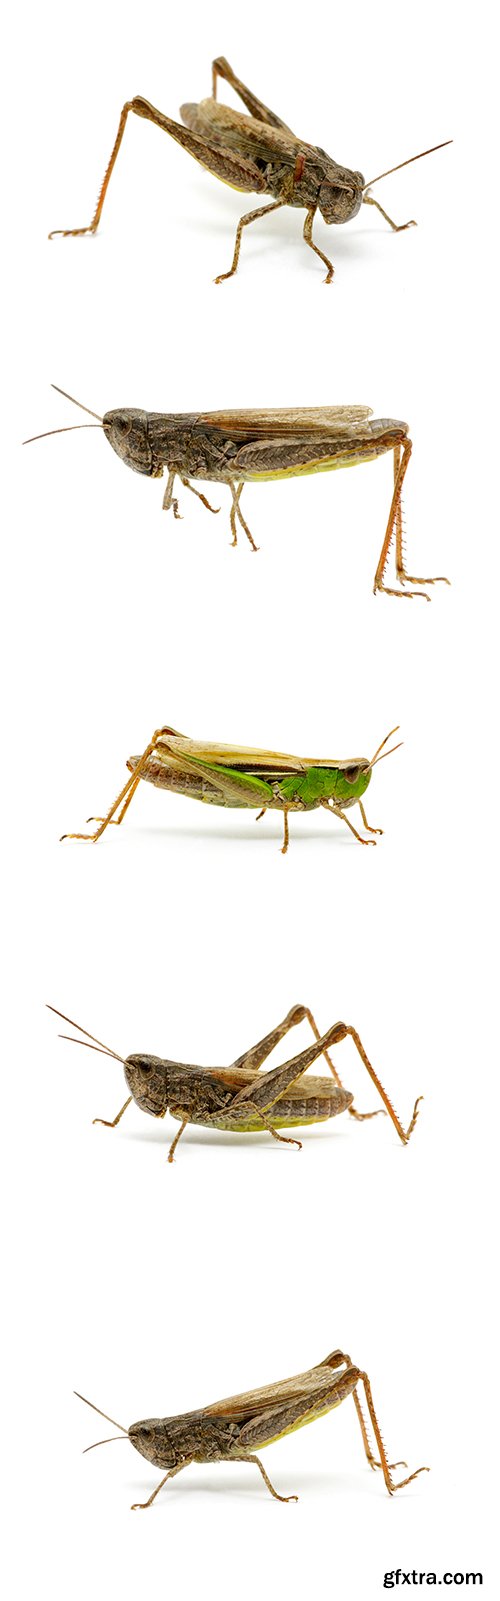 Grasshopper Isolated - 7xJPGs